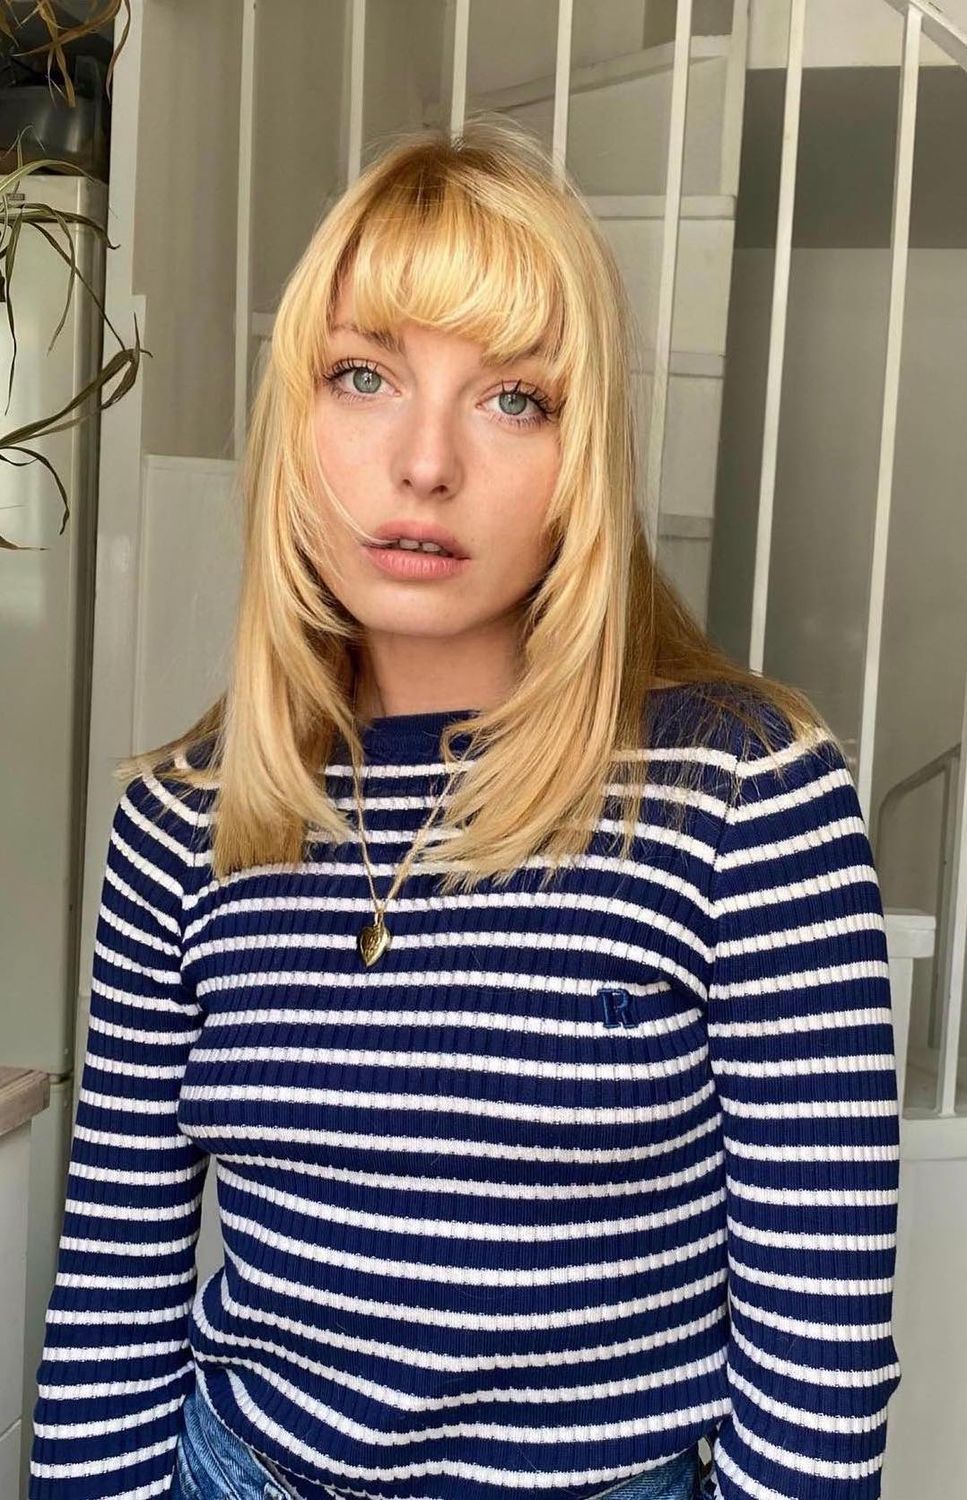 French girl Bangs short layered blonde Haircut lauriezanolettihair